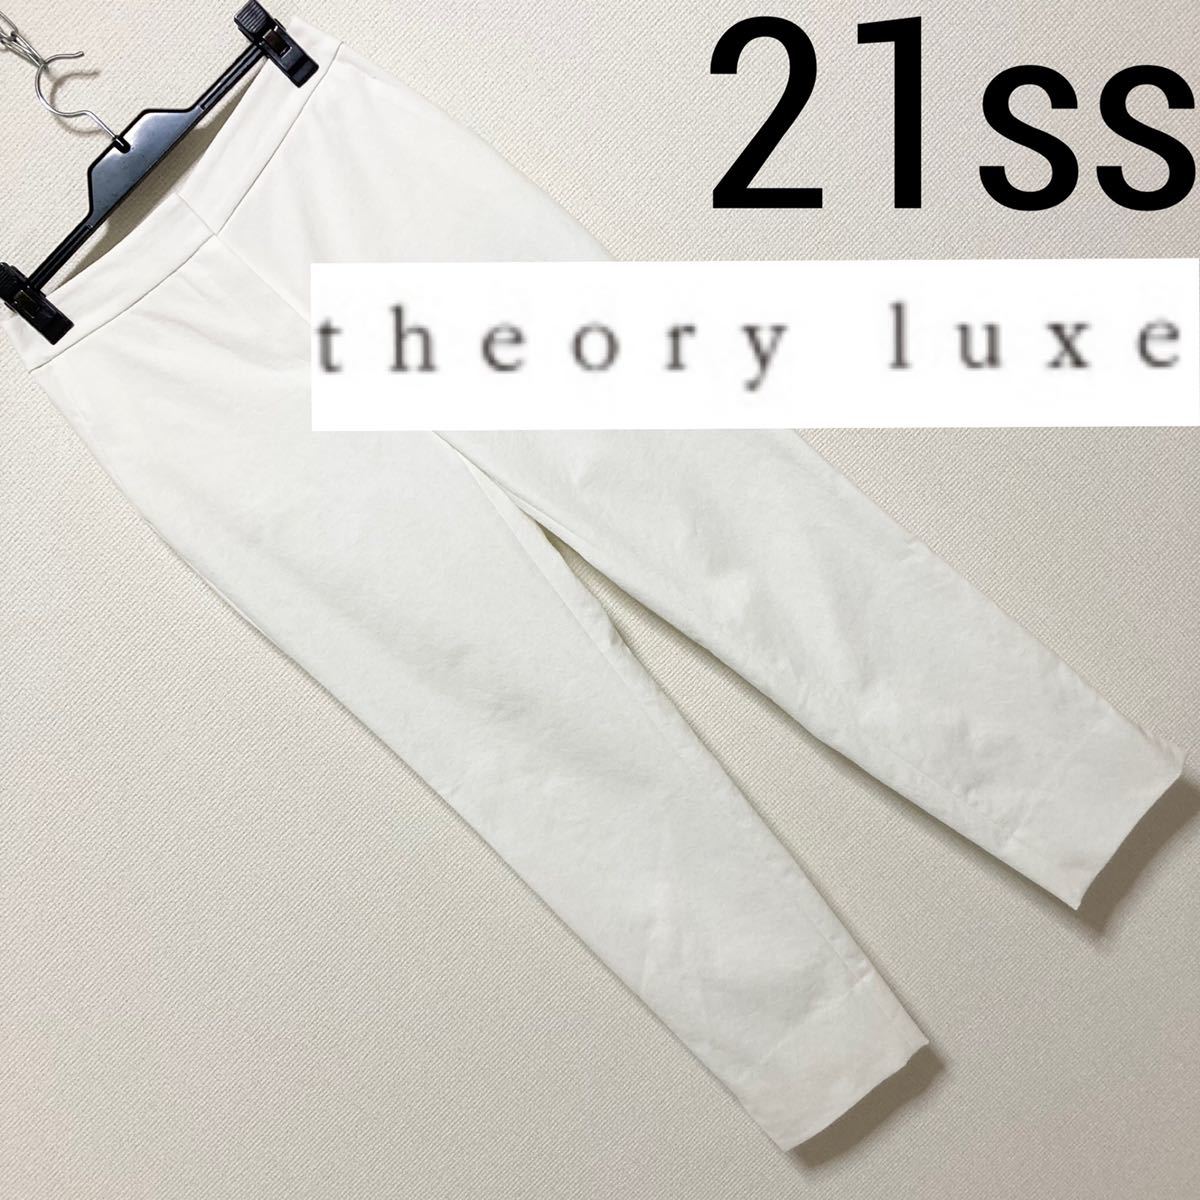 theory luxe 21SS リネン 麻 パンツ CURUNCH セオリー